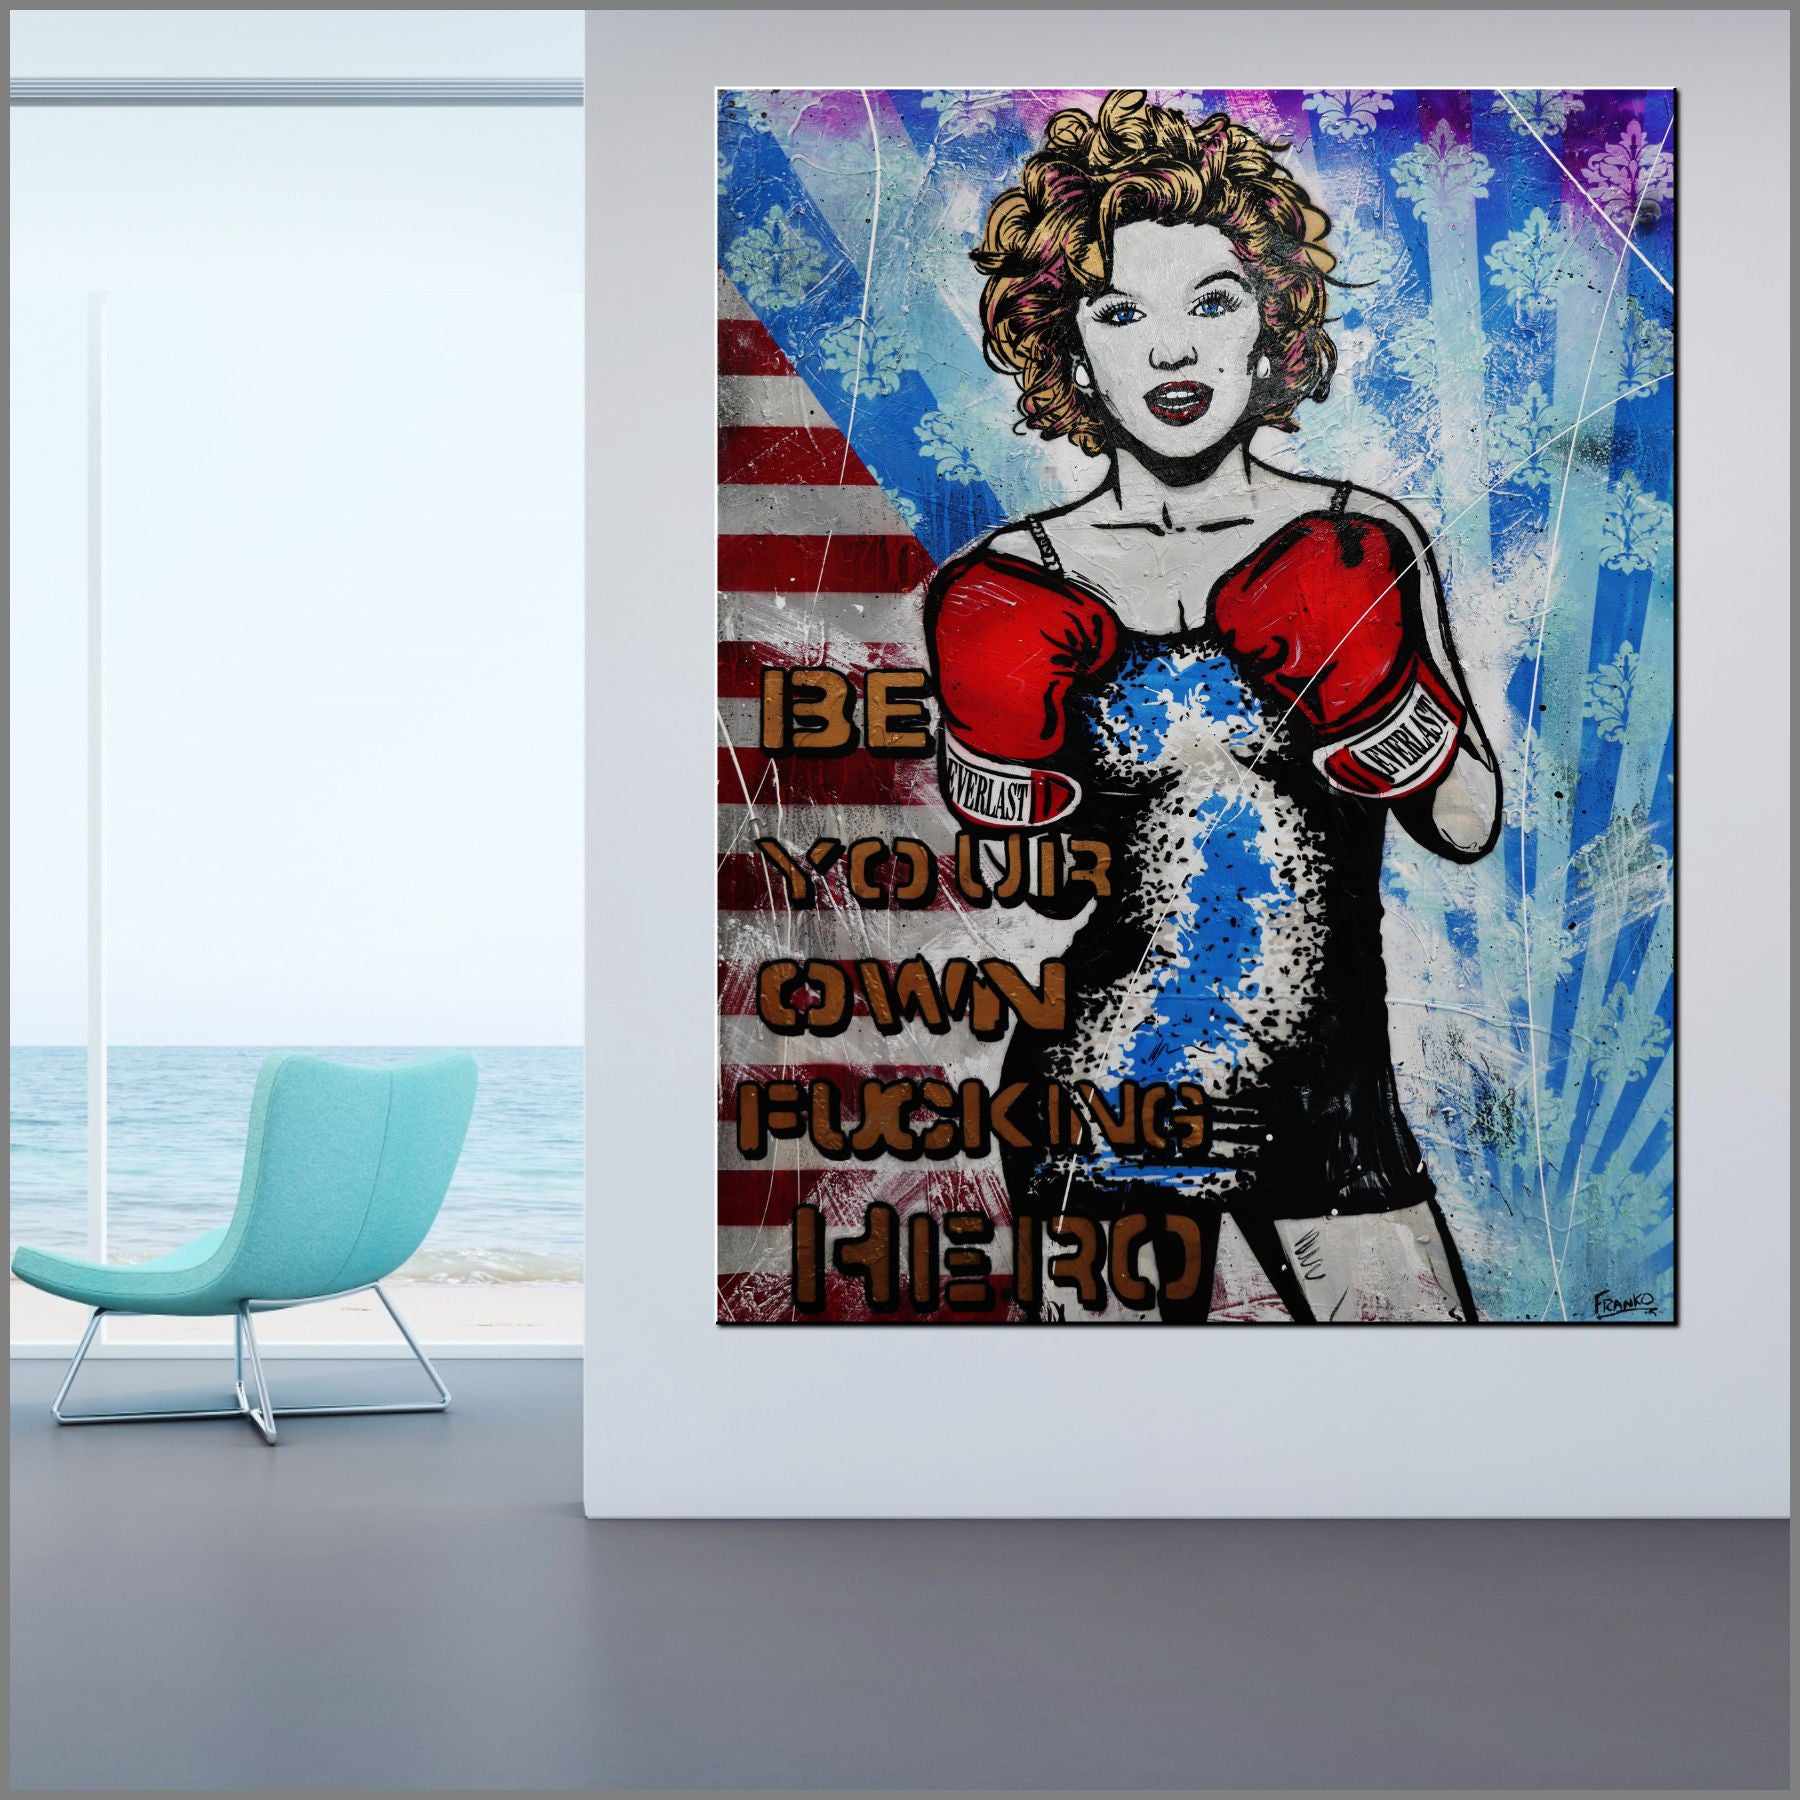 Heroes 140cm x 180cm Marilyn Monroe Boxing Textured Urban Pop Art Painting (SOLD)-urban pop-Franko-[Franko]-[Australia_Art]-[Art_Lovers_Australia]-Franklin Art Studio